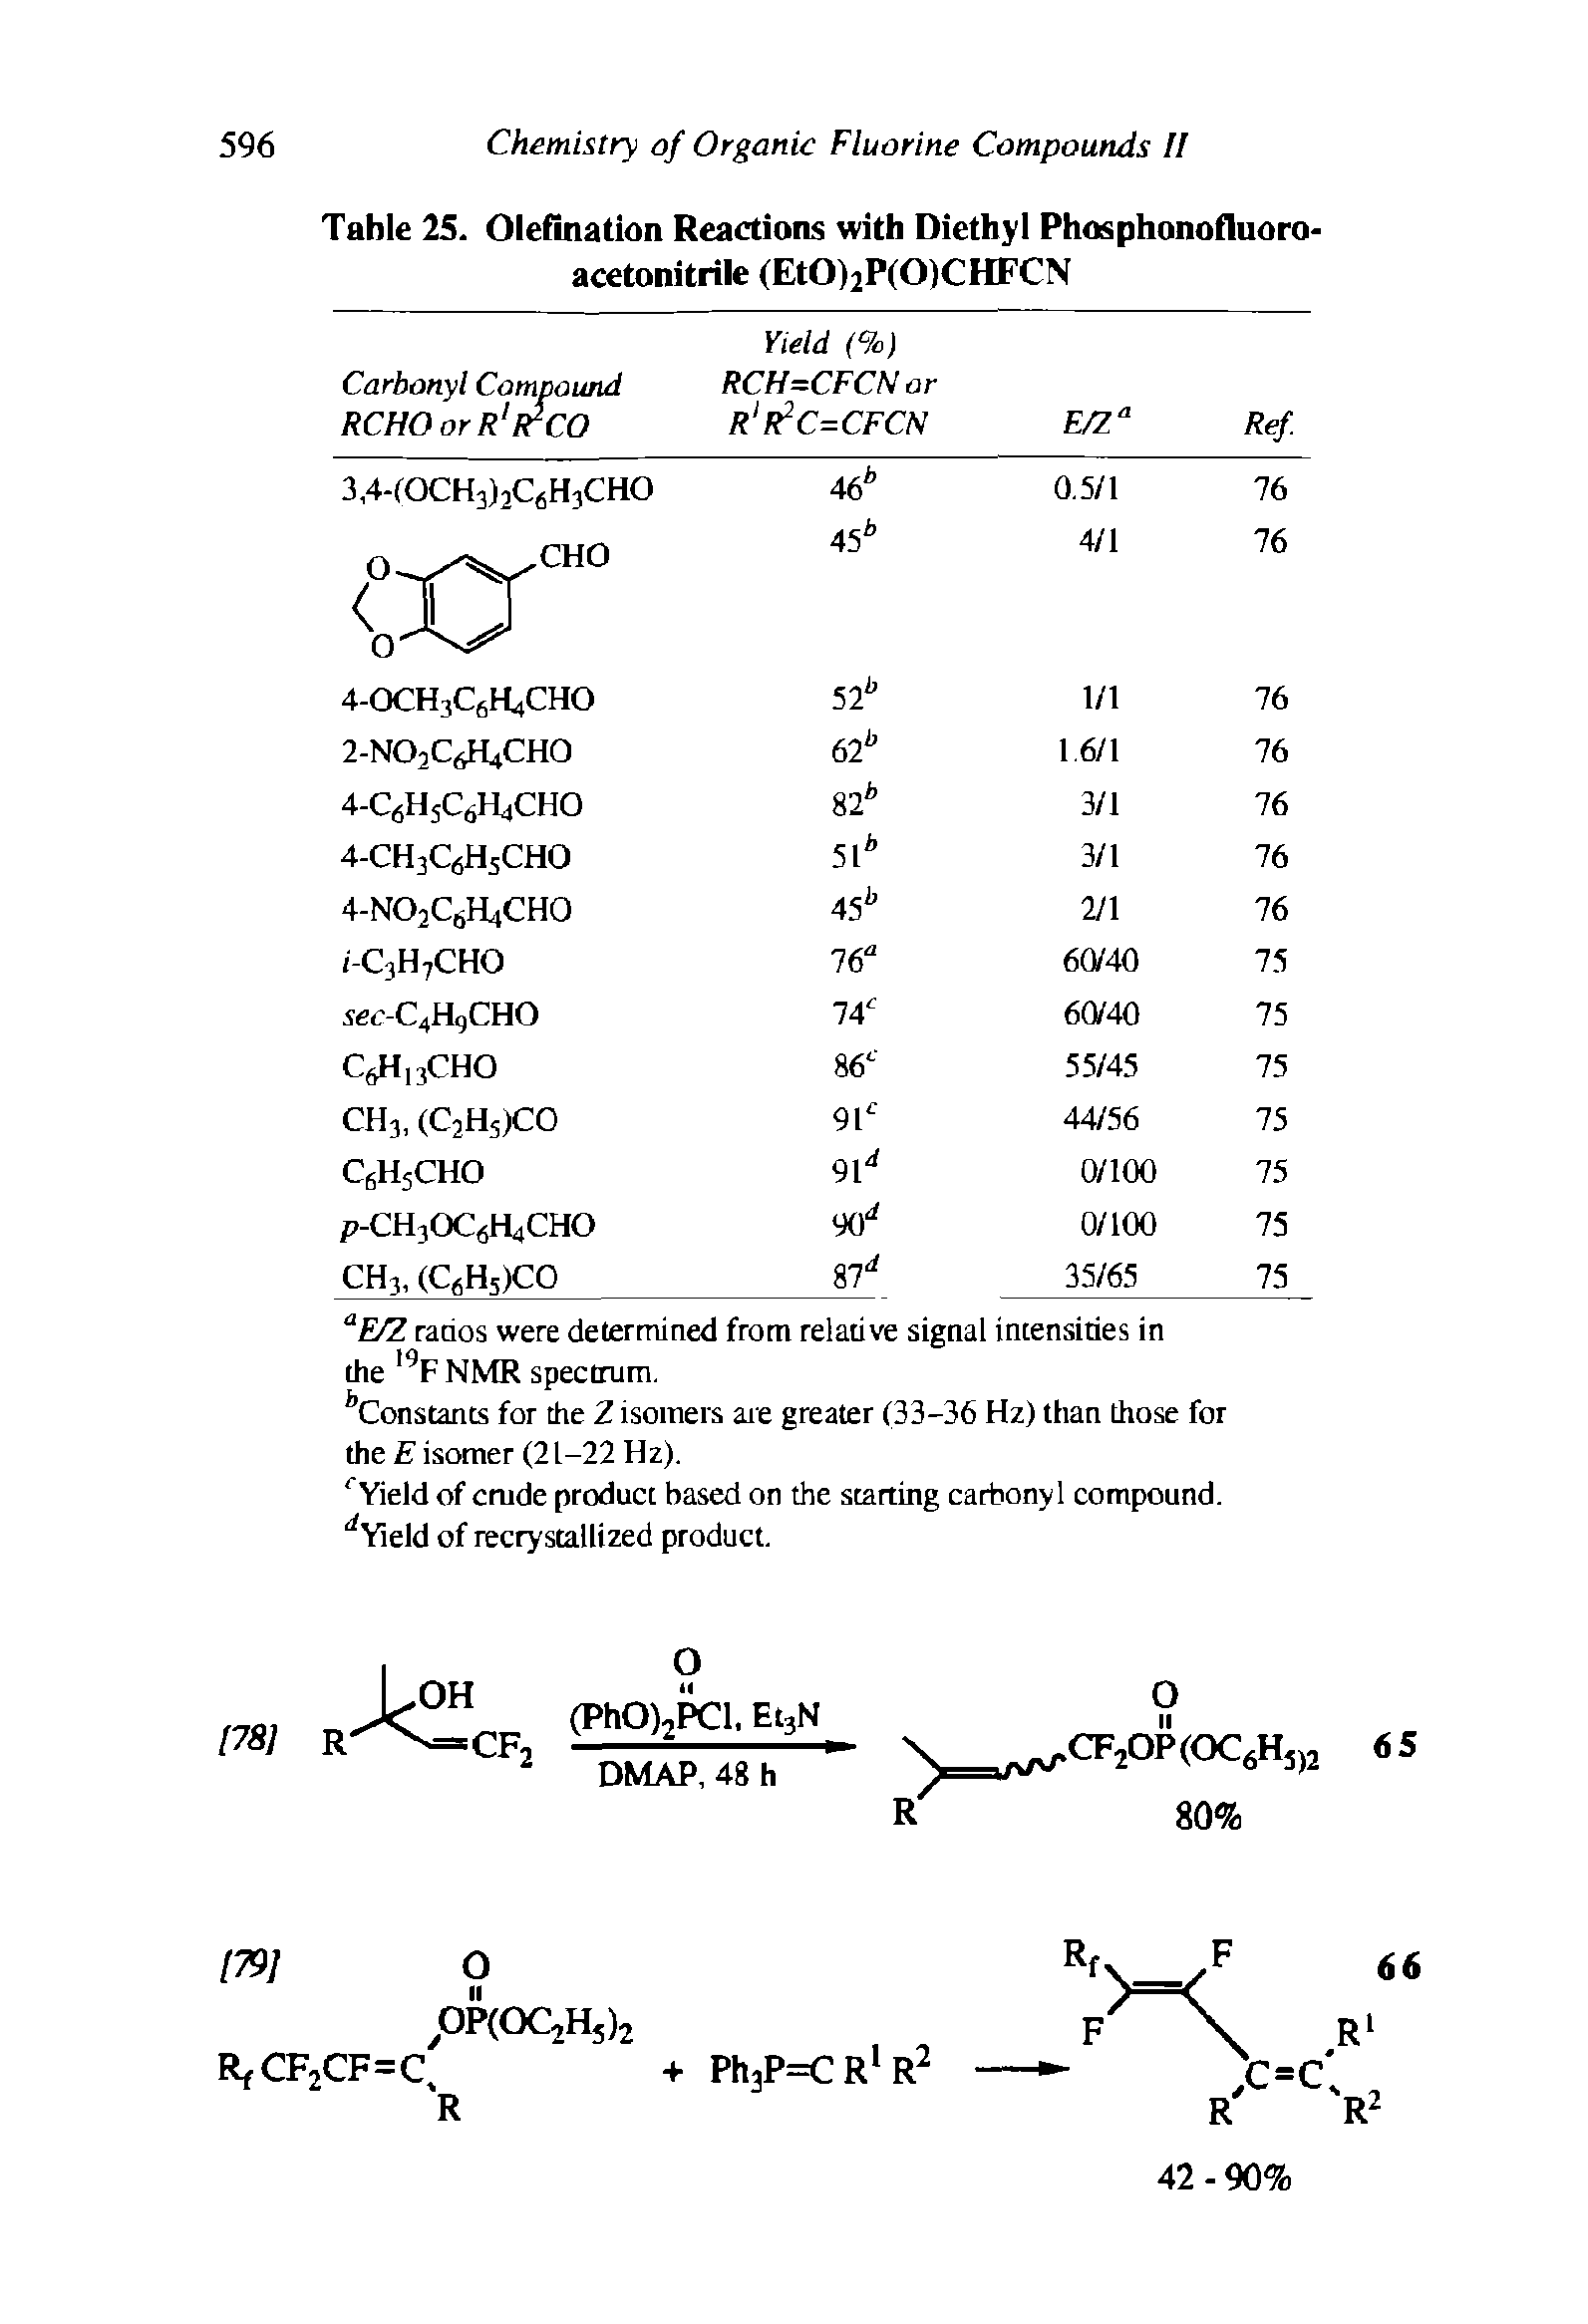 Table 25. Olefination Reactions with Diethyl Phosphonofluoro-acetonitrile (EtO)jP(0)CHFCN...